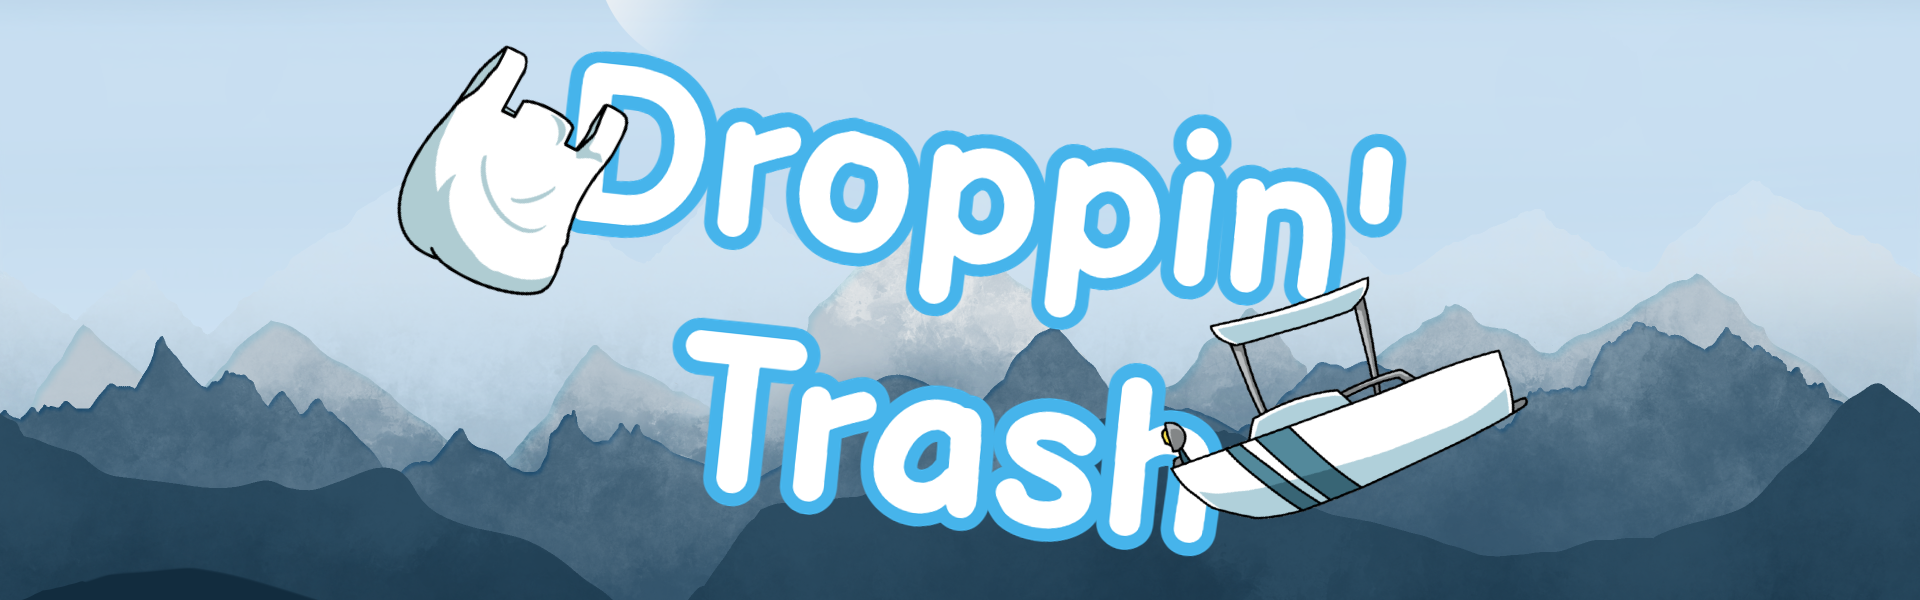 Droppin' Trash